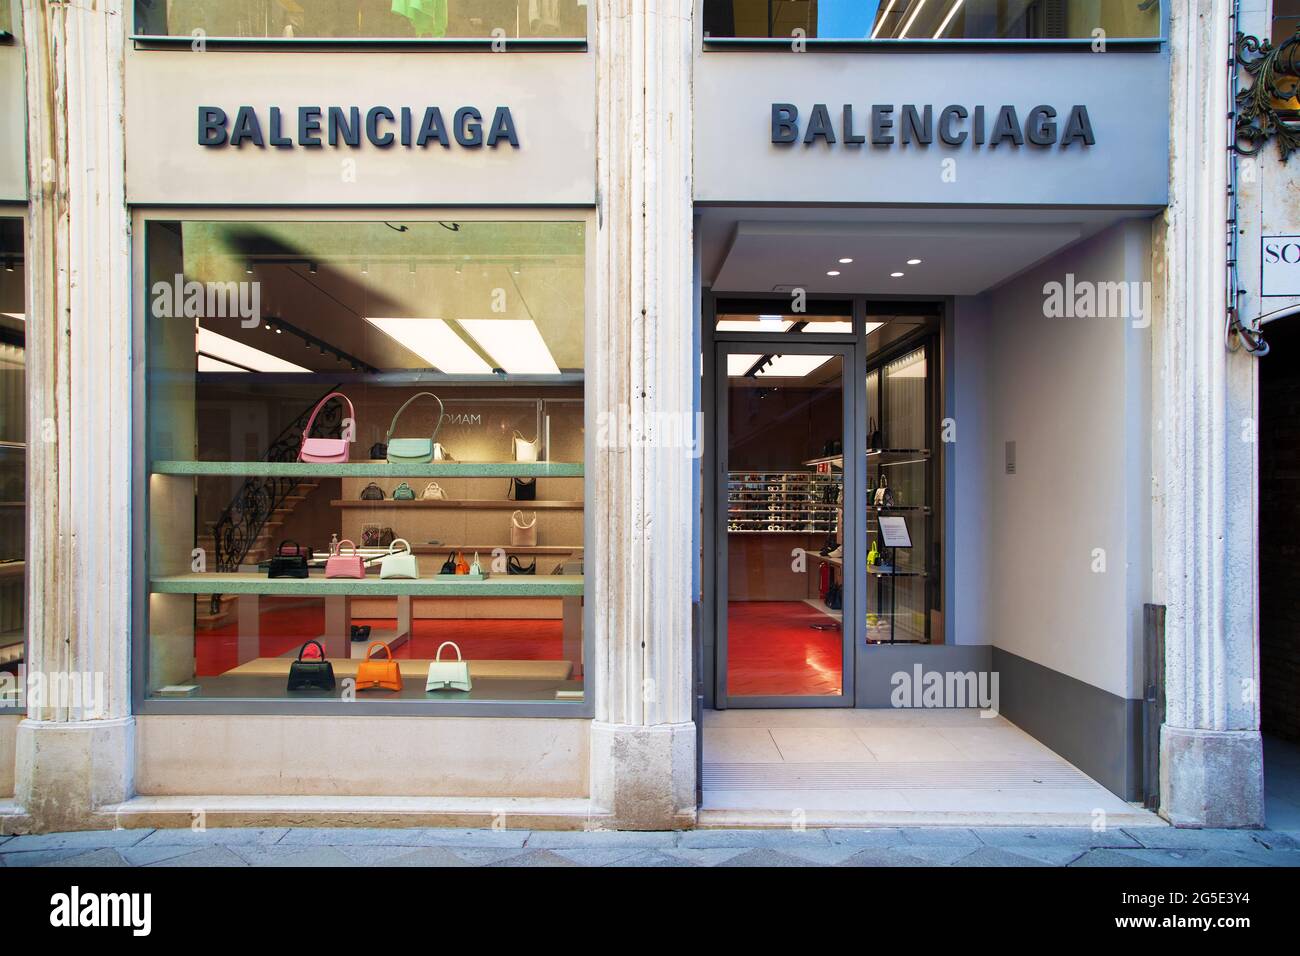 Balenciaga windows in Venice, Italy Stock Photo - Alamy